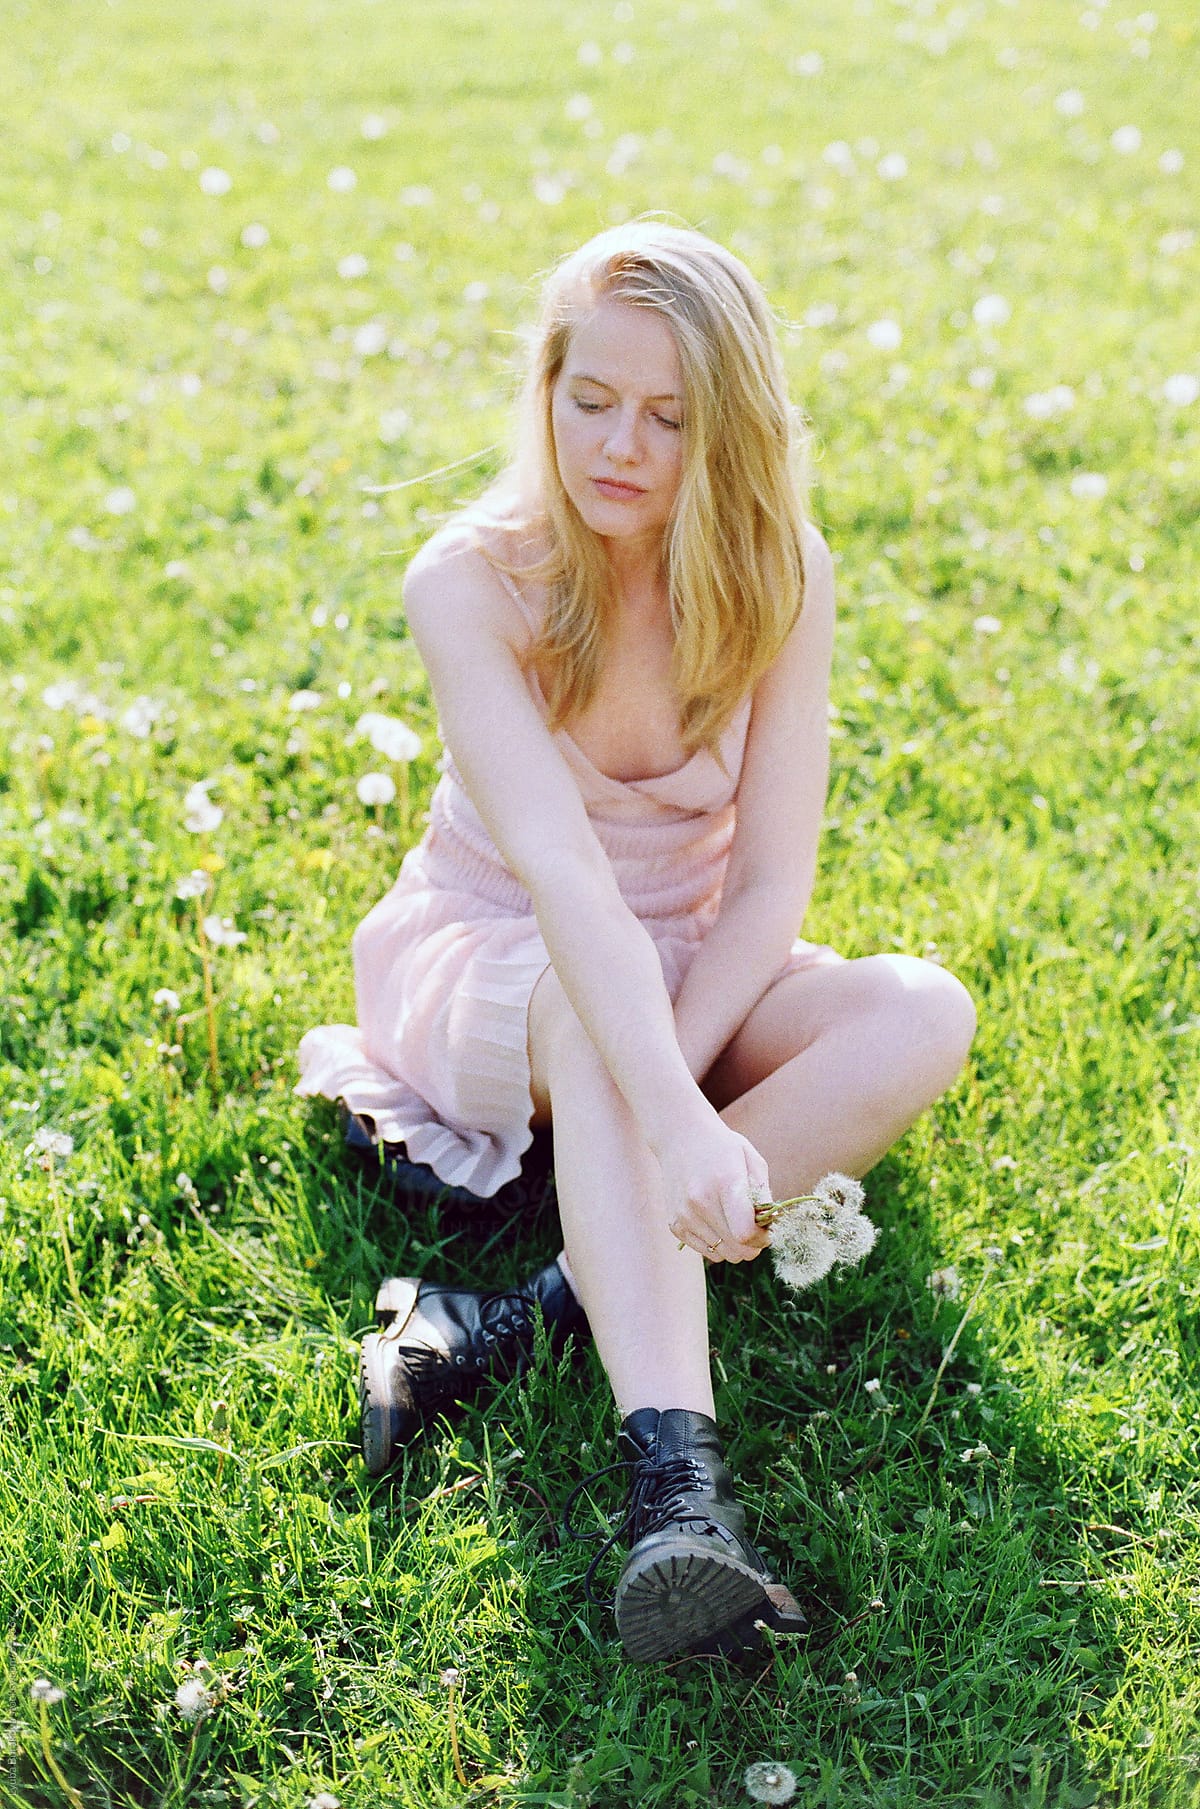 Young Blonde Woman Sitting On A Field With Dandelions Del Colaborador De Stocksy Amor 